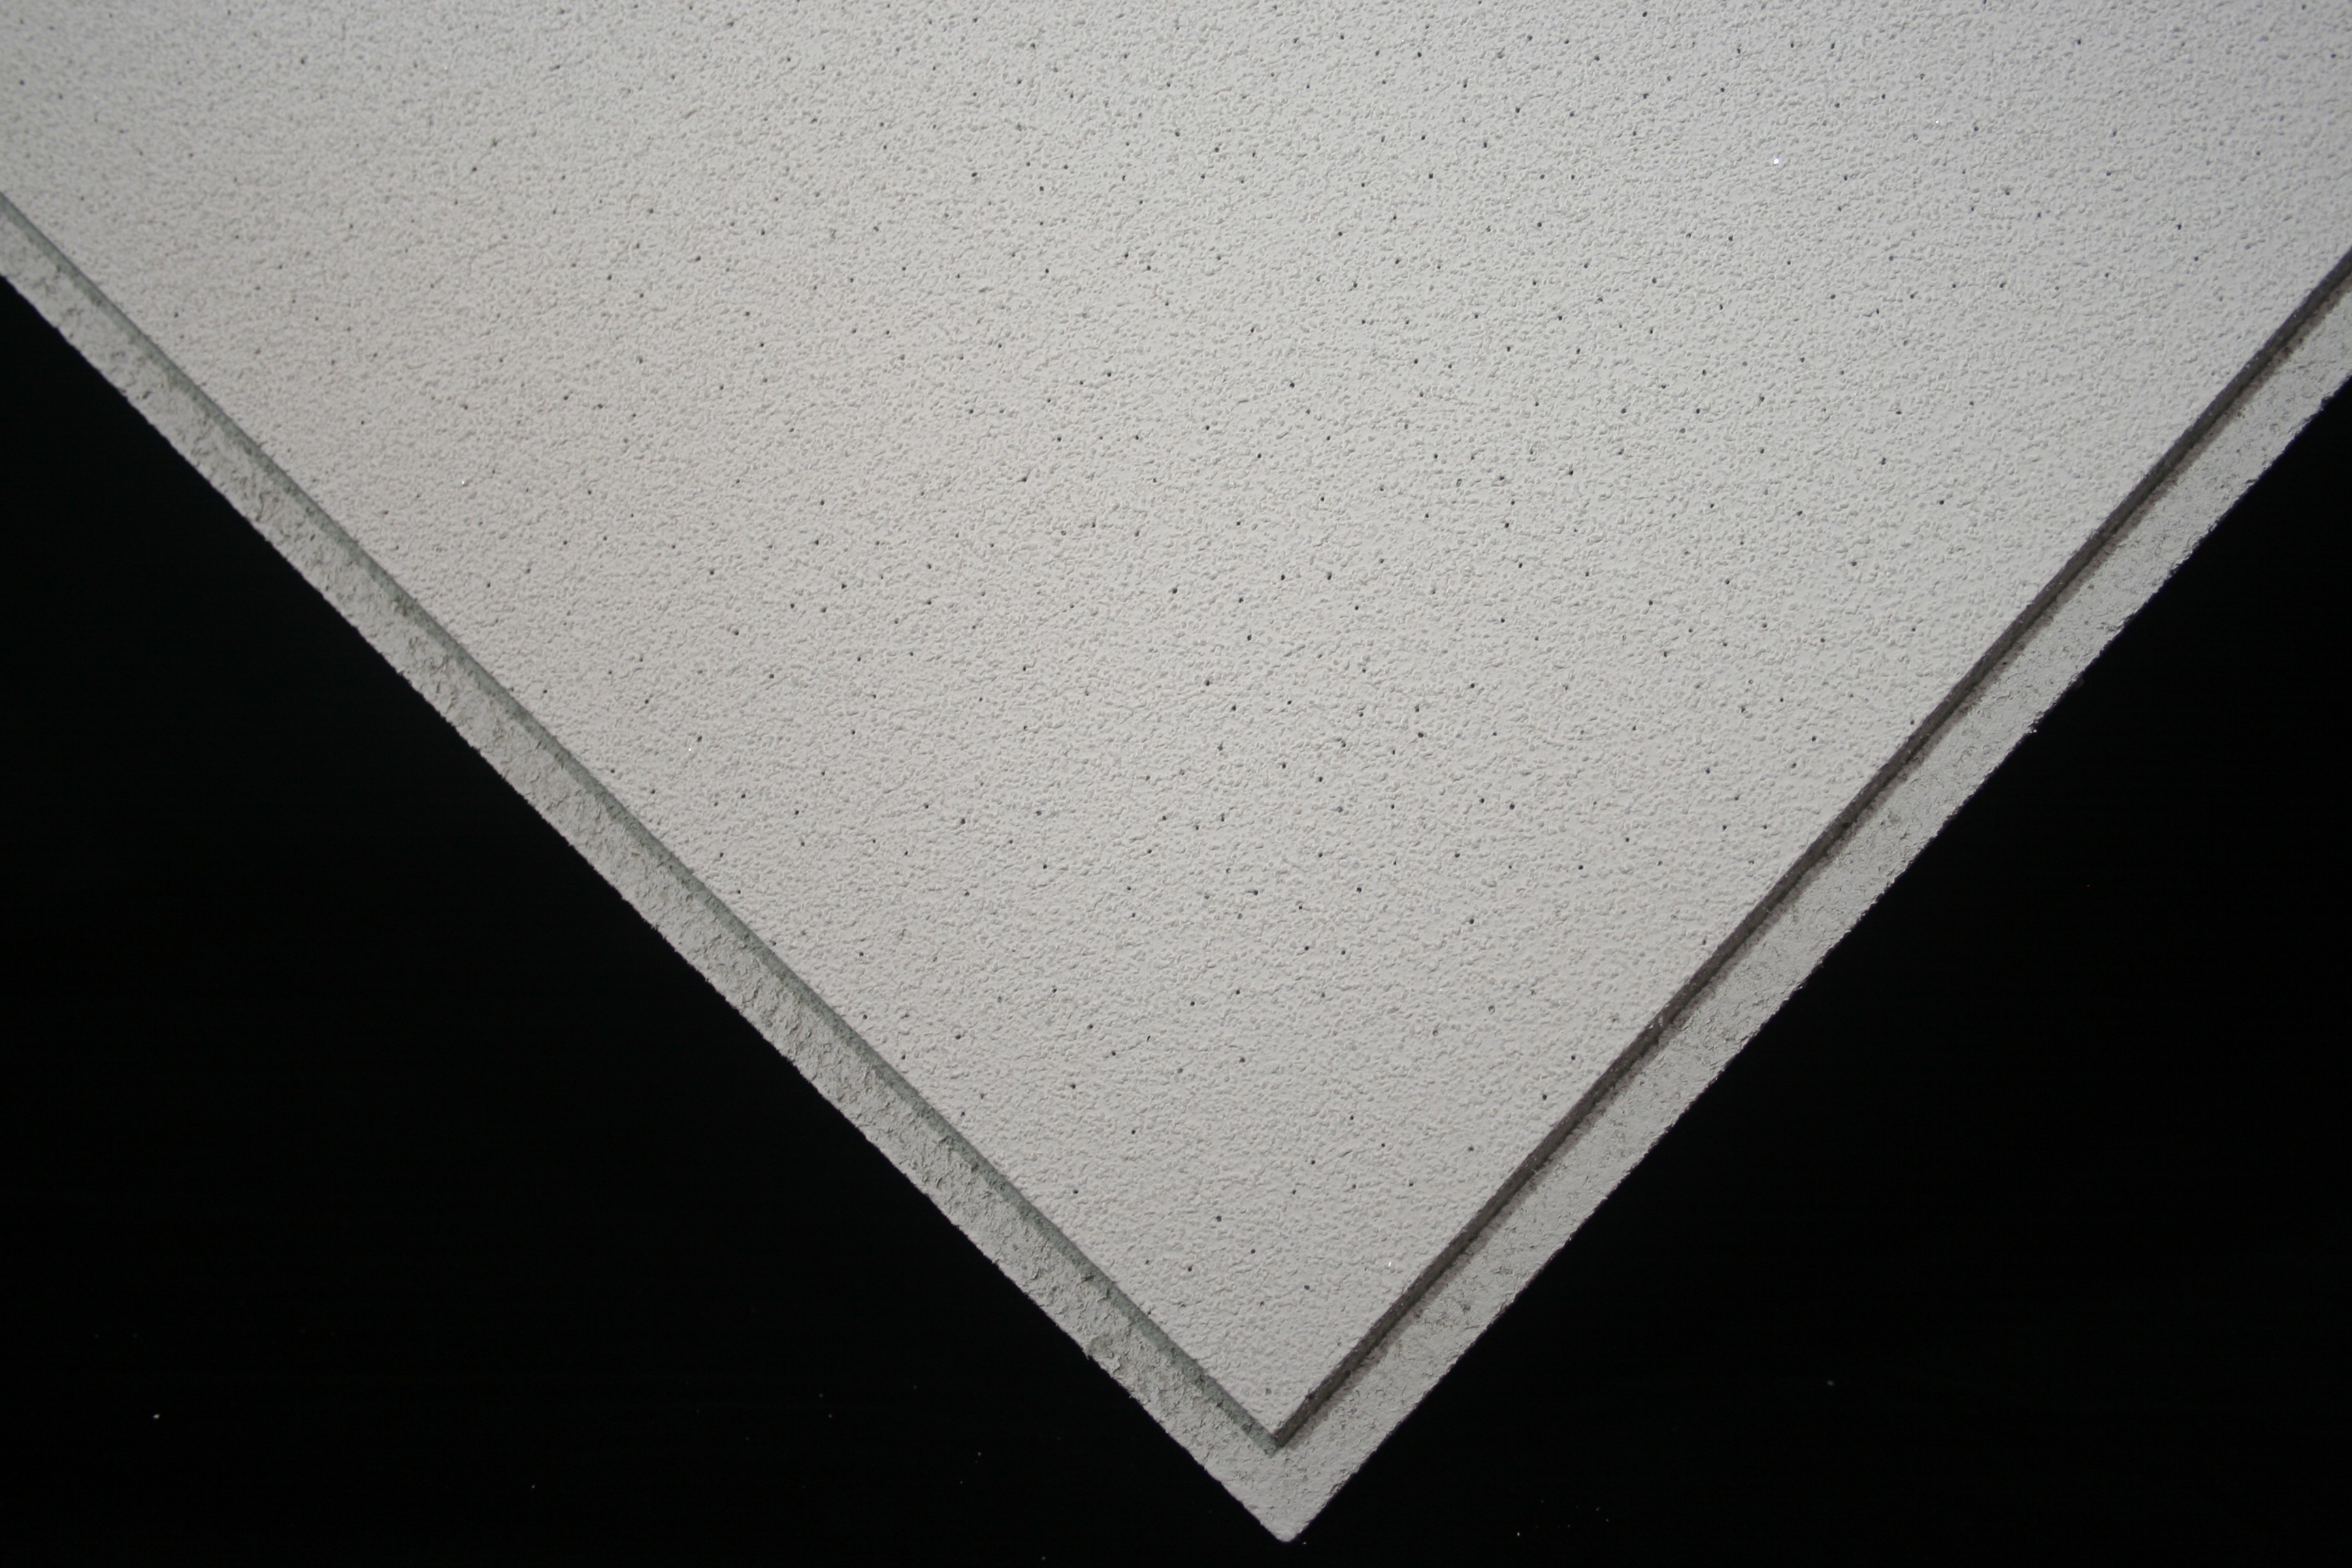 Tegular Ceiling Tile Profile Tegular Ceiling Tile Profile mineral fibre ceiling tile owa cosmos lacasemu 3456 X 2304